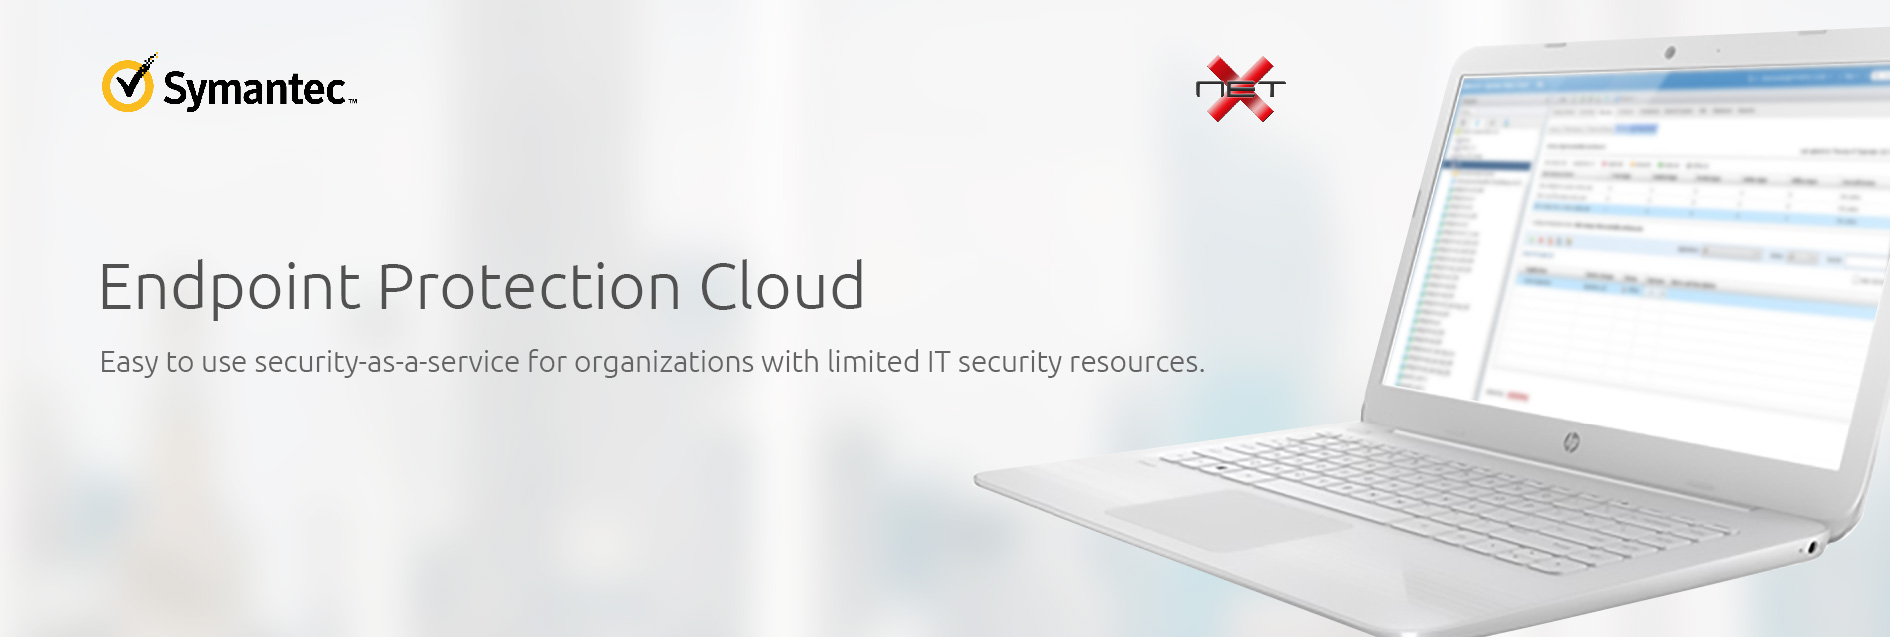 symantec endpoint protection cloud pricing